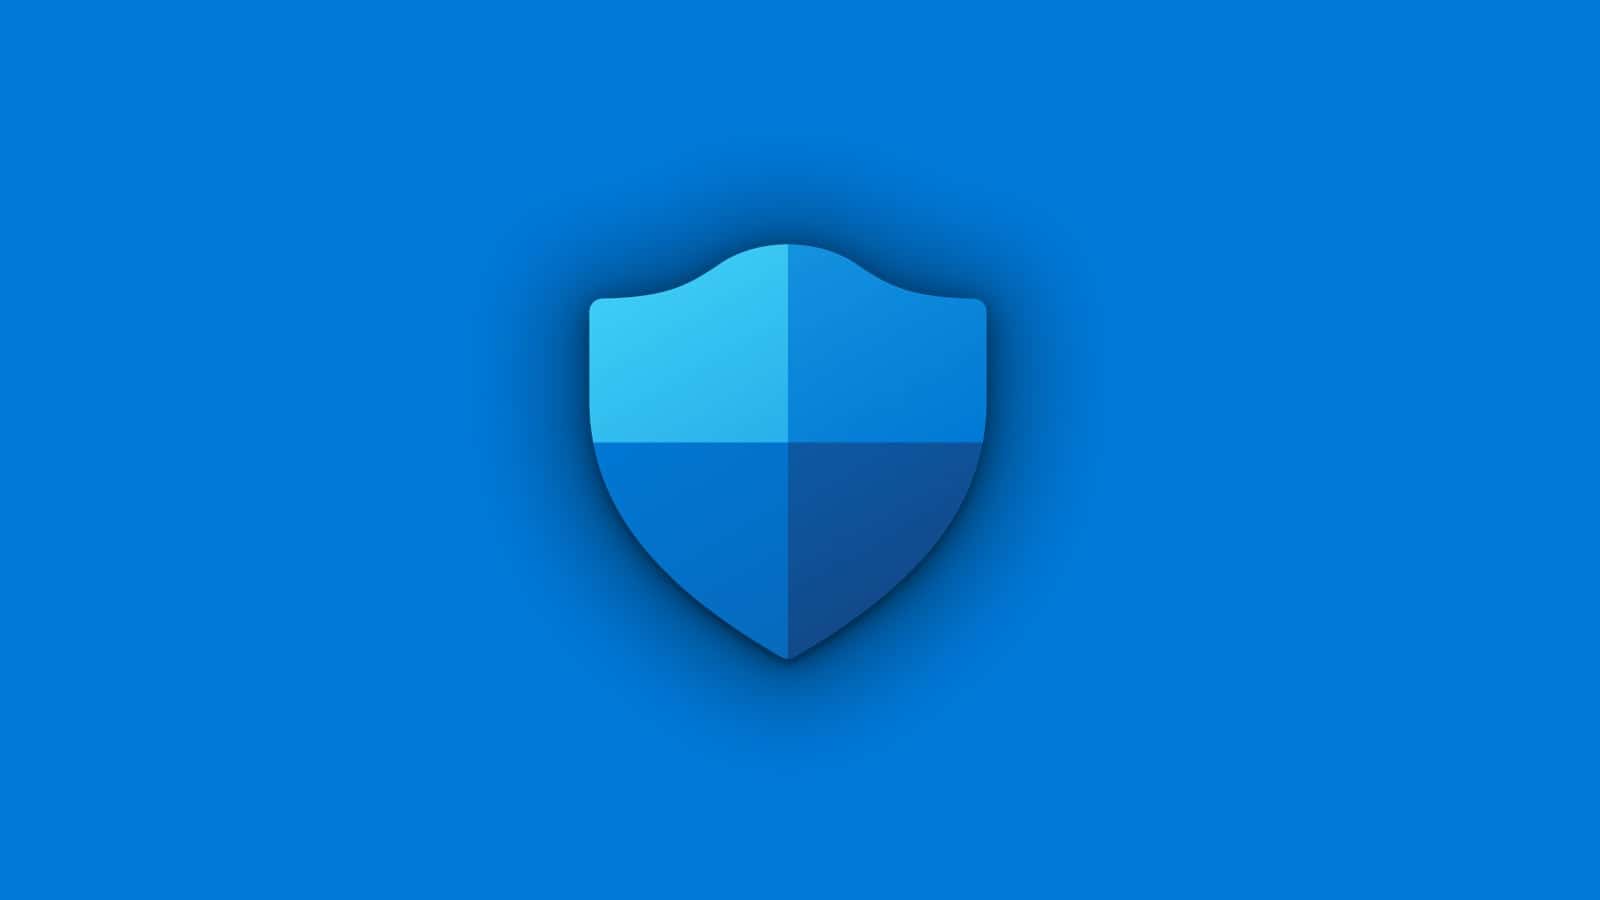 Microsoft Defender “Behavior:Win32/Hive.ZY” false-positive threat is finally over